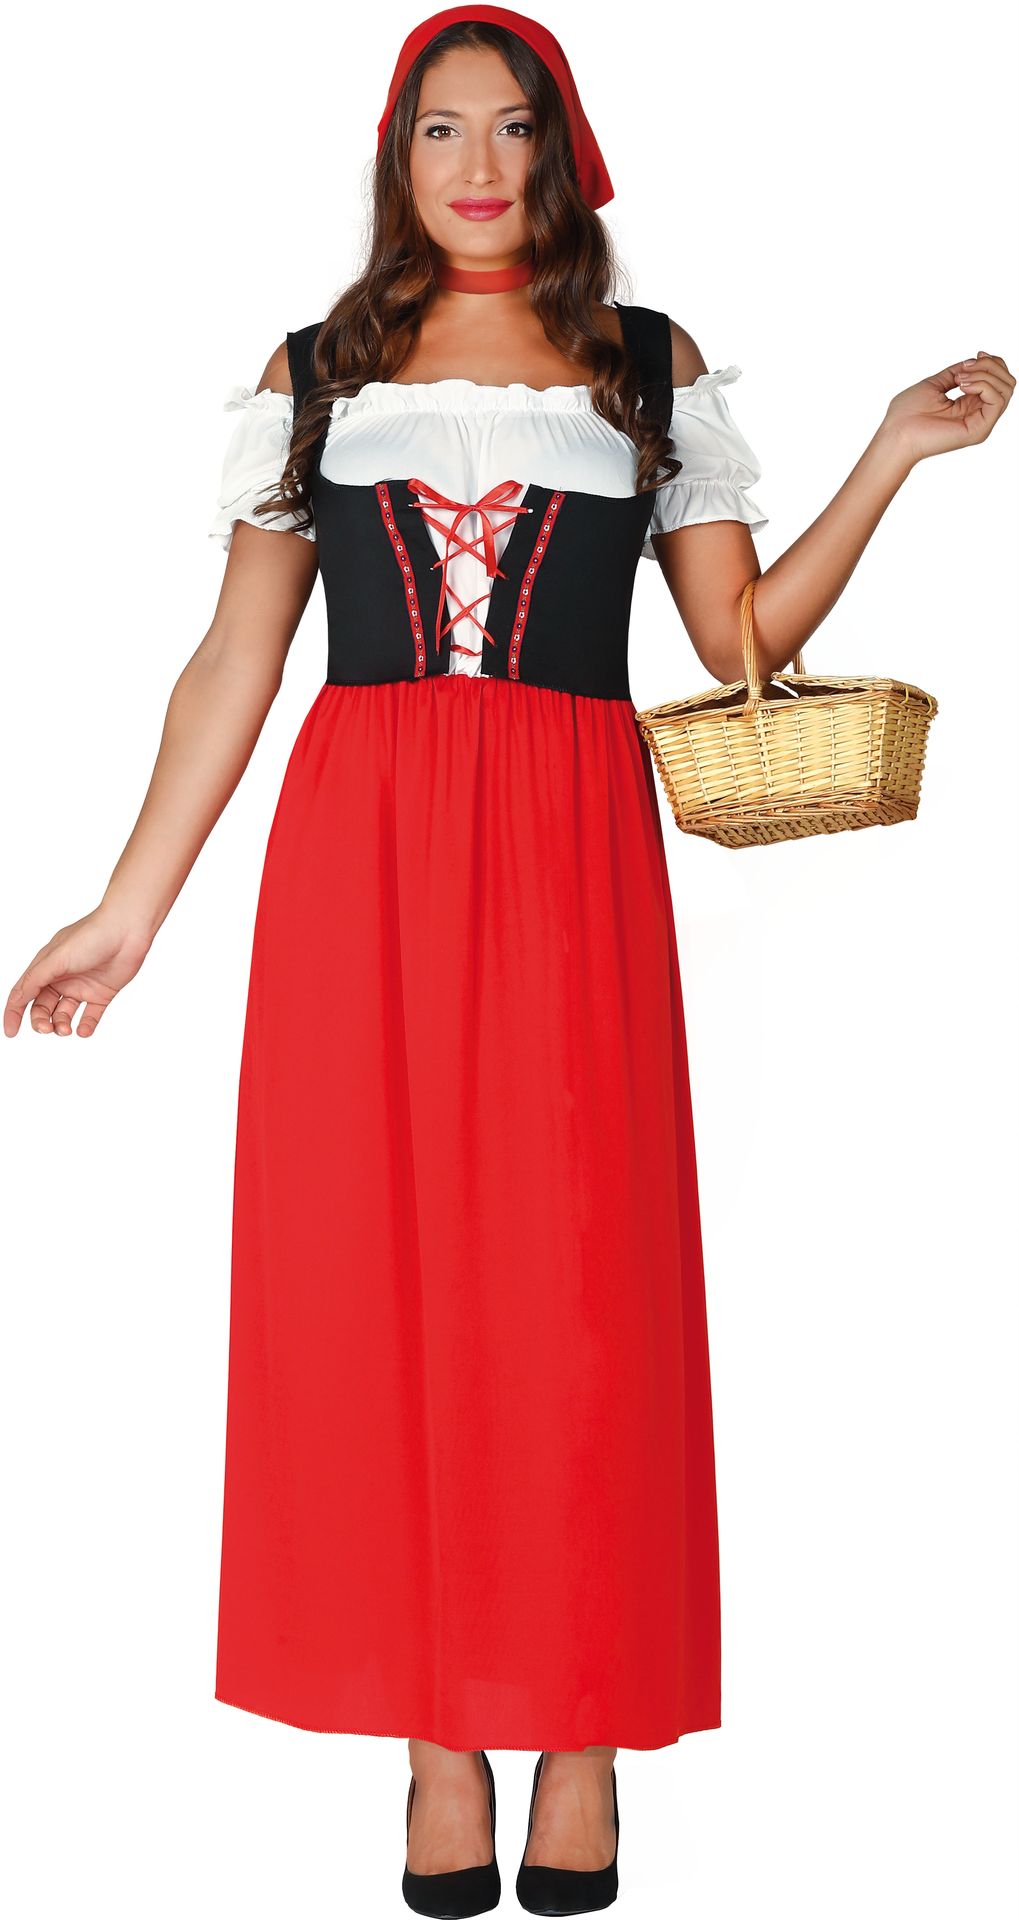 Middeleeuwse dame jurk